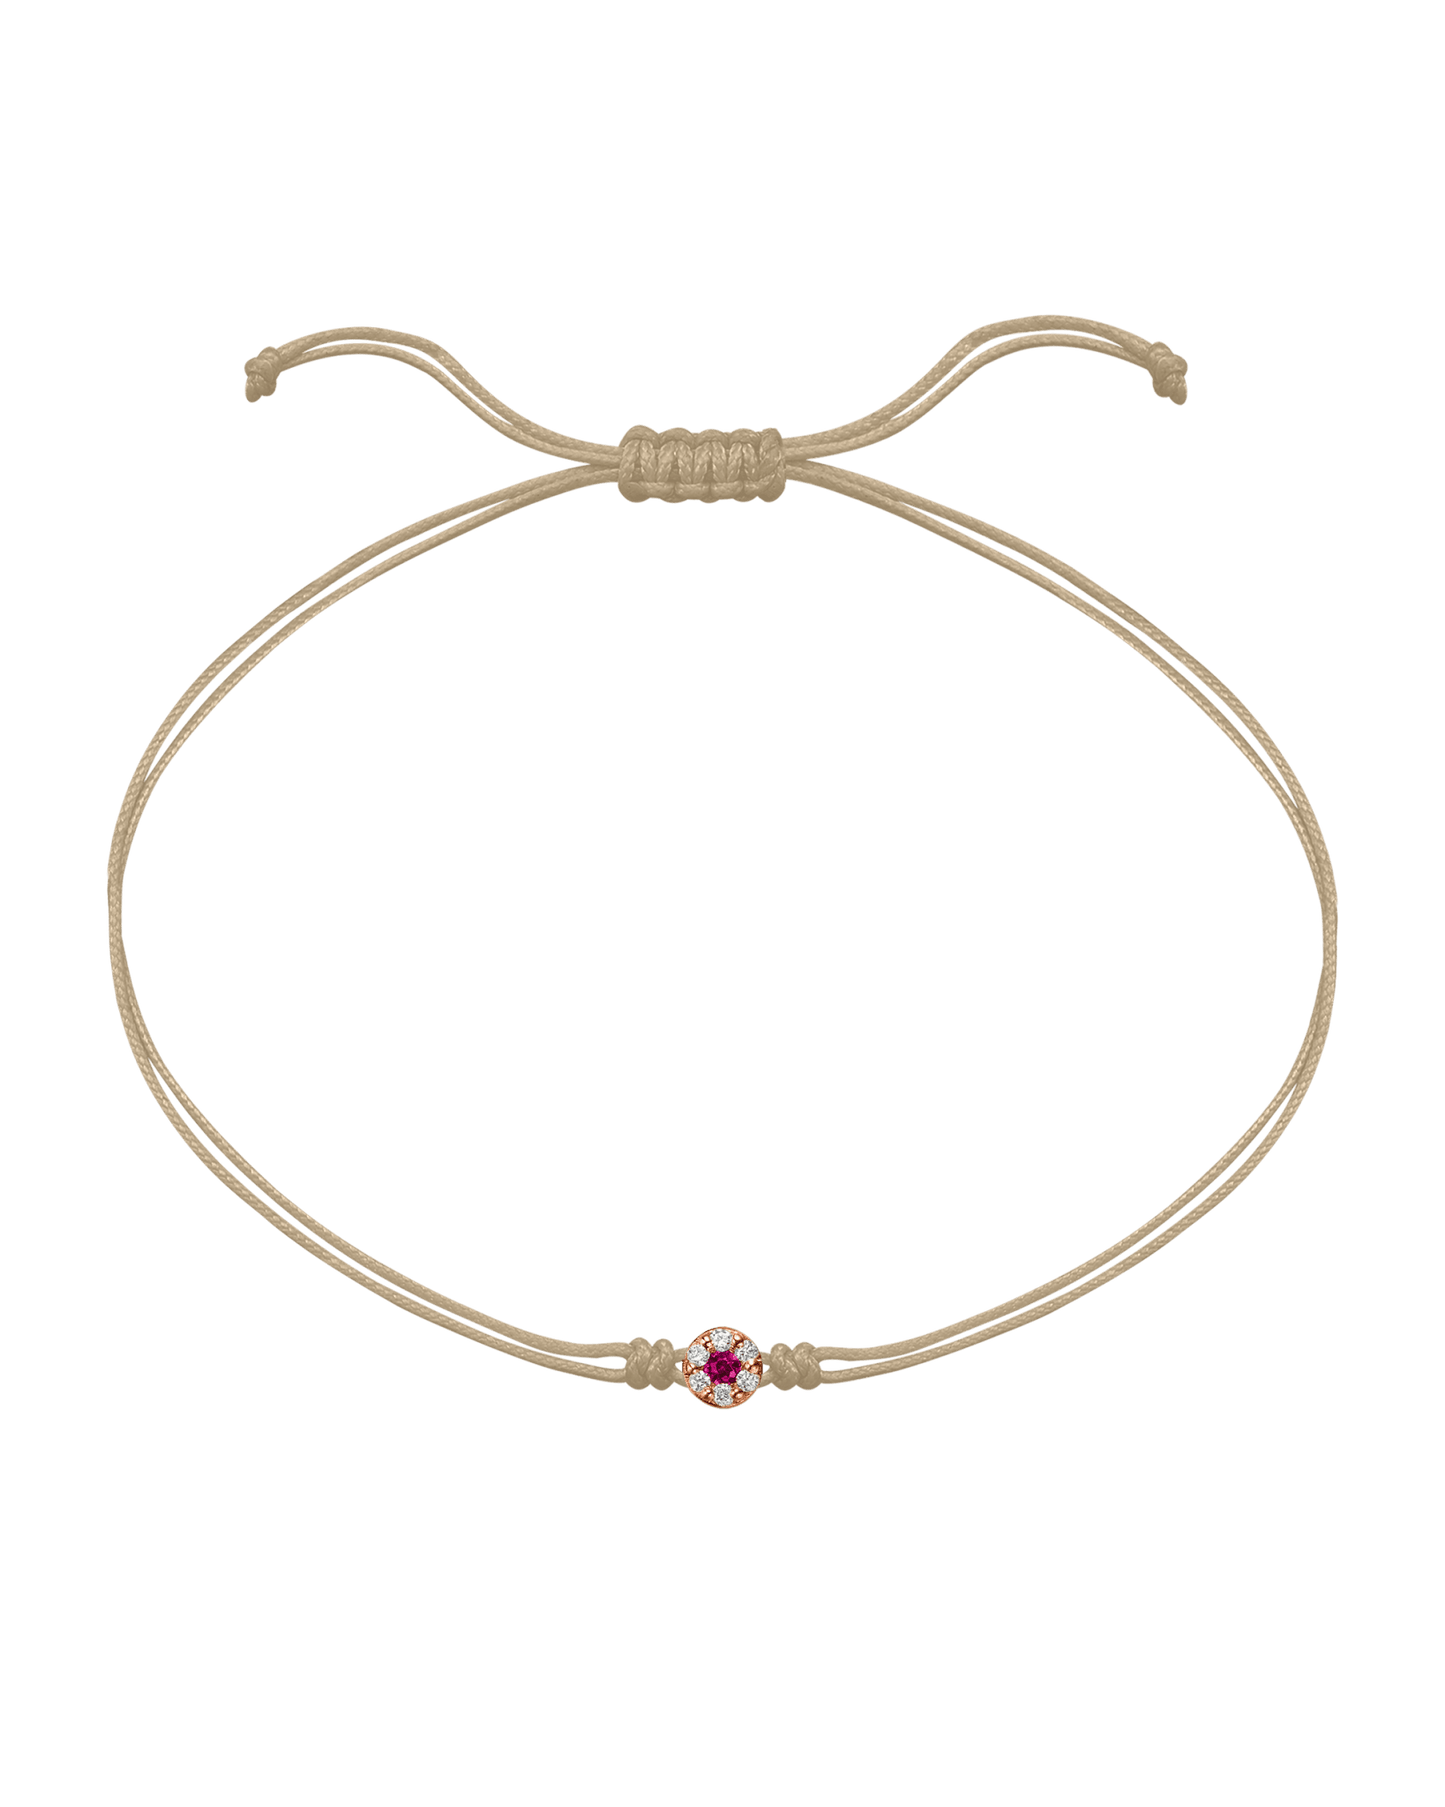 String of Love Diamond and Gemstone - 14K Rose Gold Bracelet 14K Solid Gold Beige Ruby 